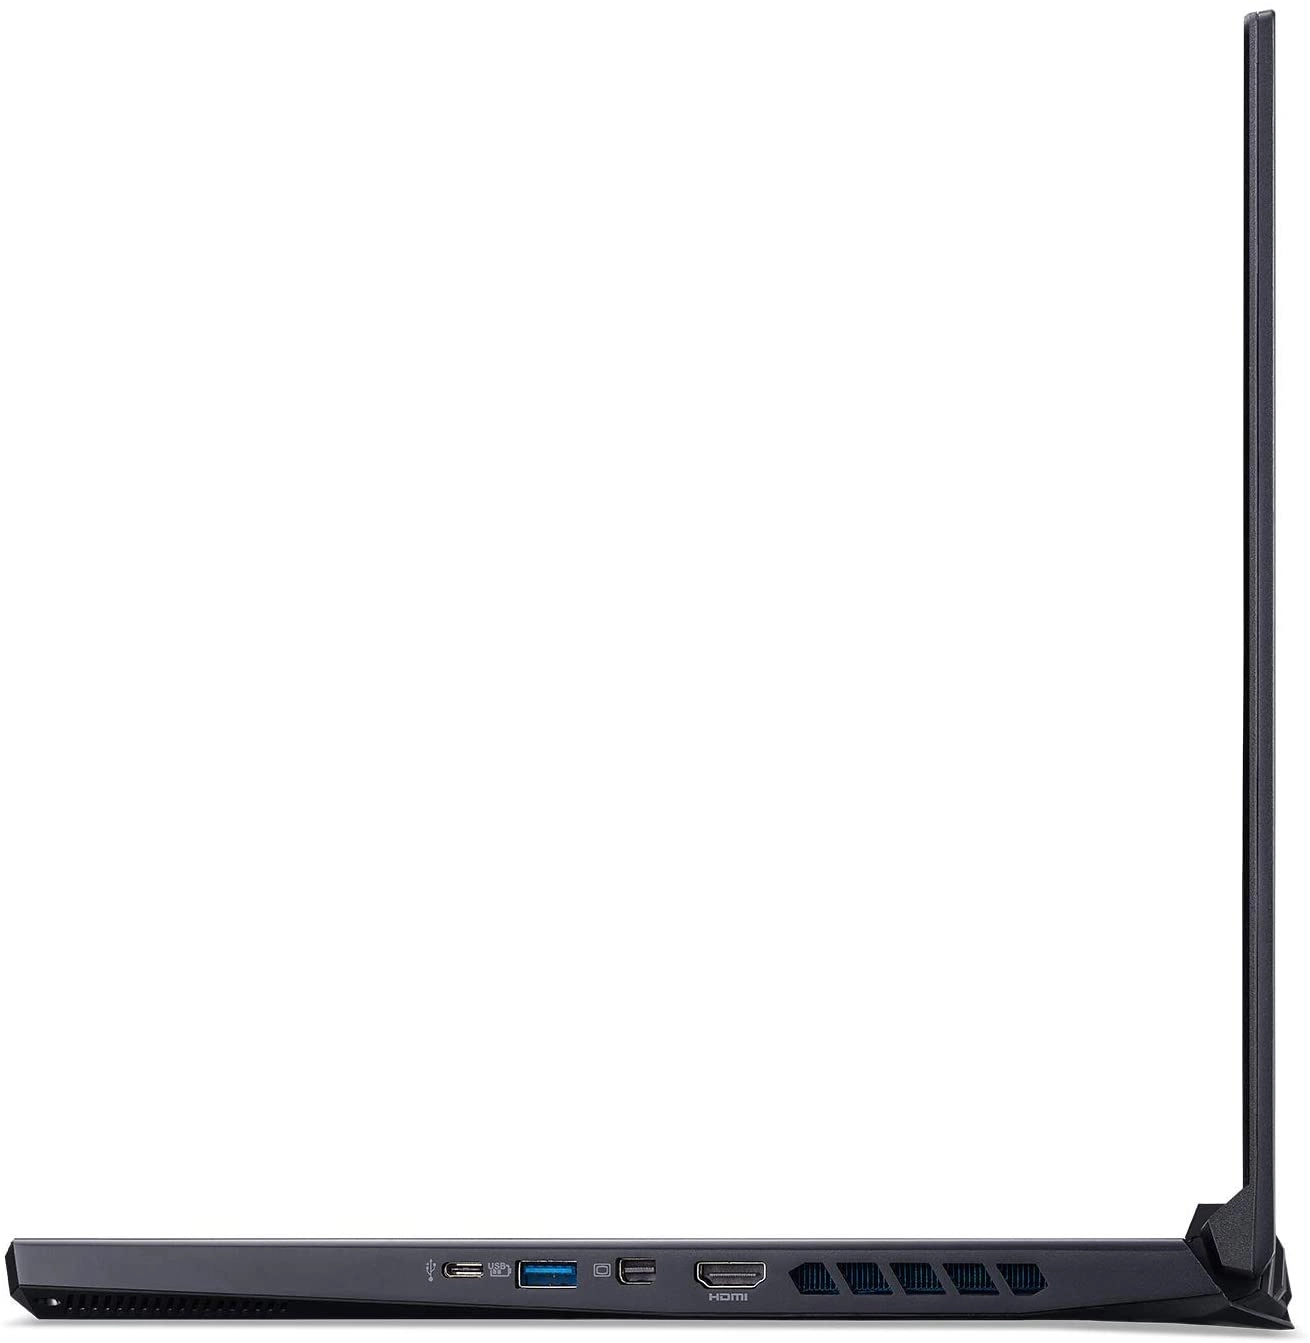 Acer PH317-54-70Z5 laptop image